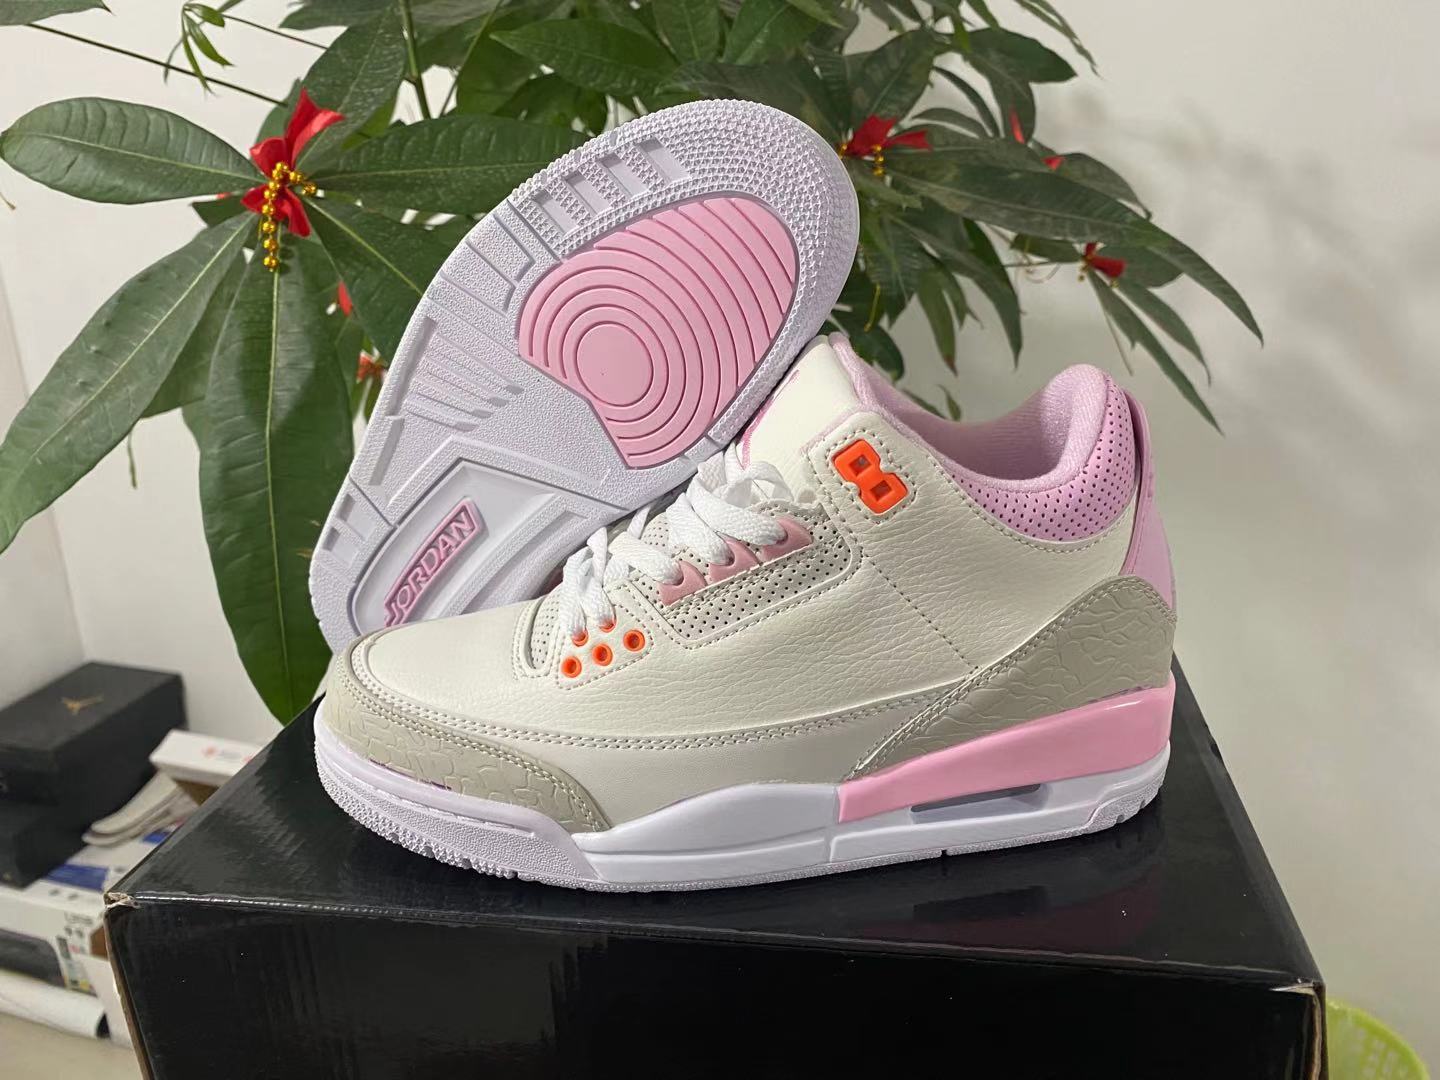 New Air Jordan 3 Retro White Pink Cement Shoes